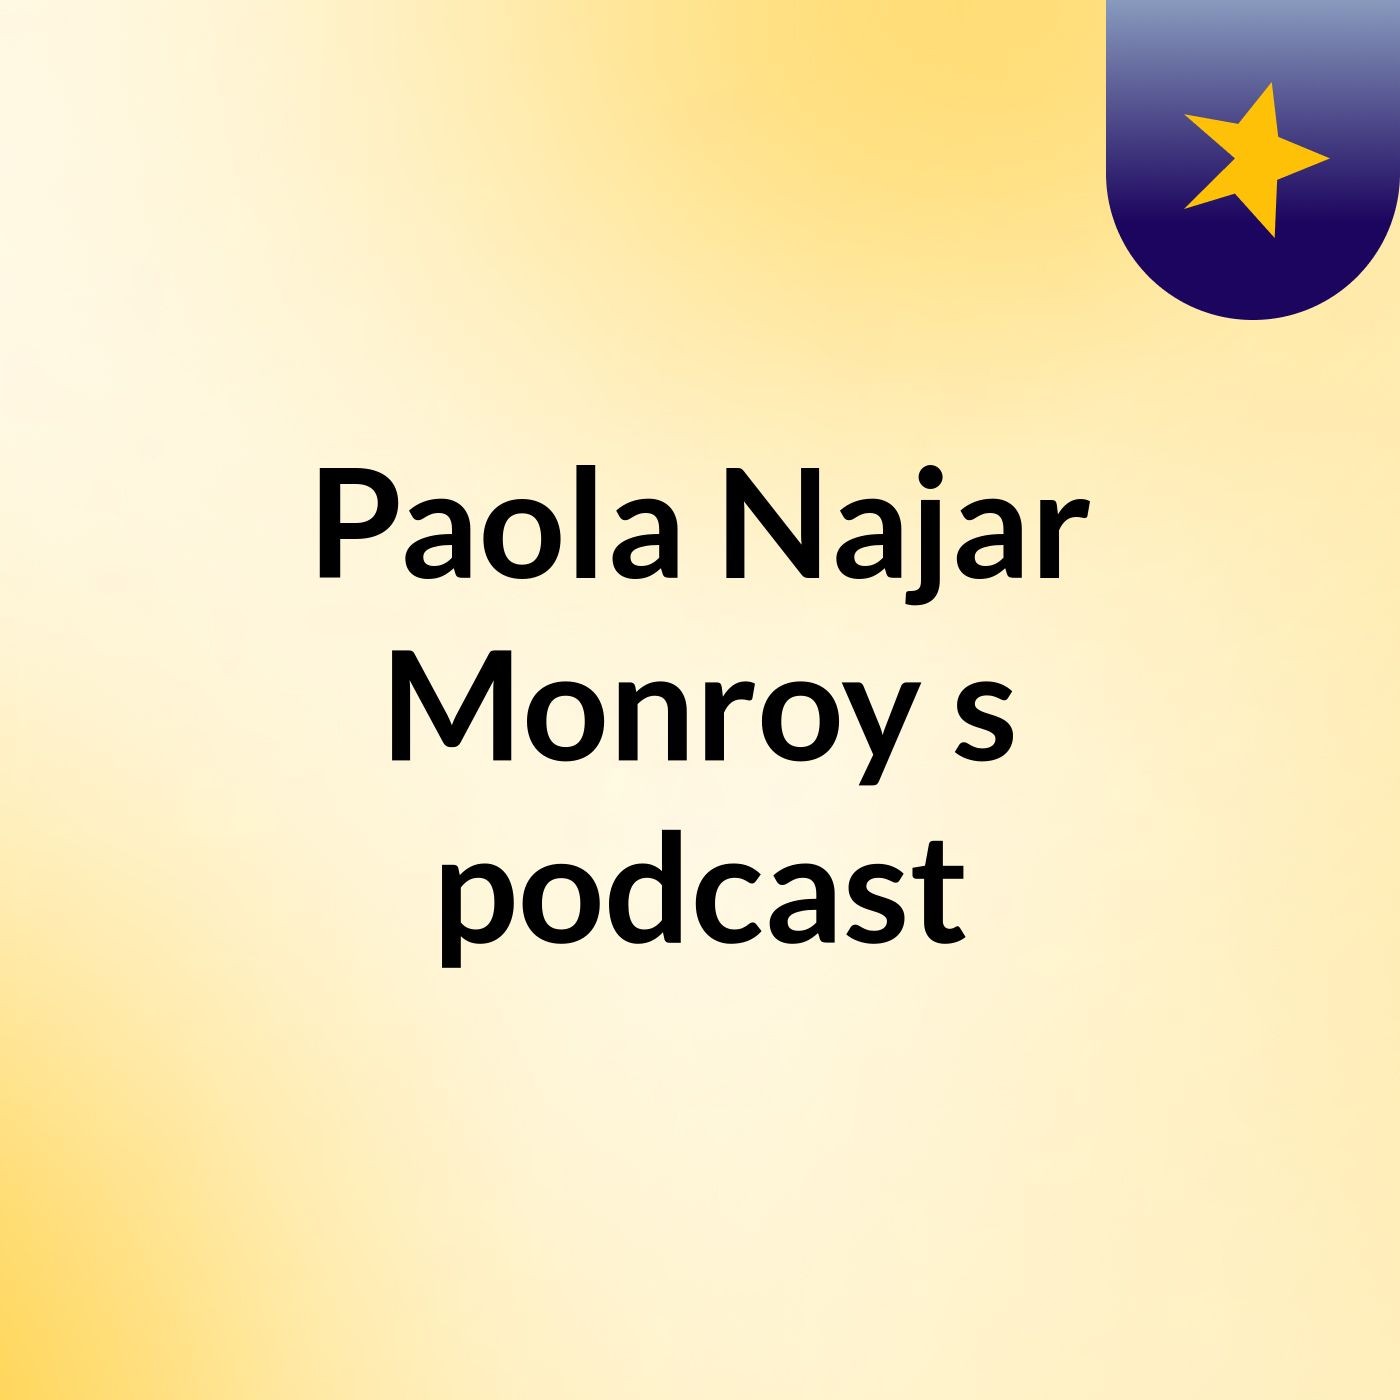 Paola Najar Monroy's podcast